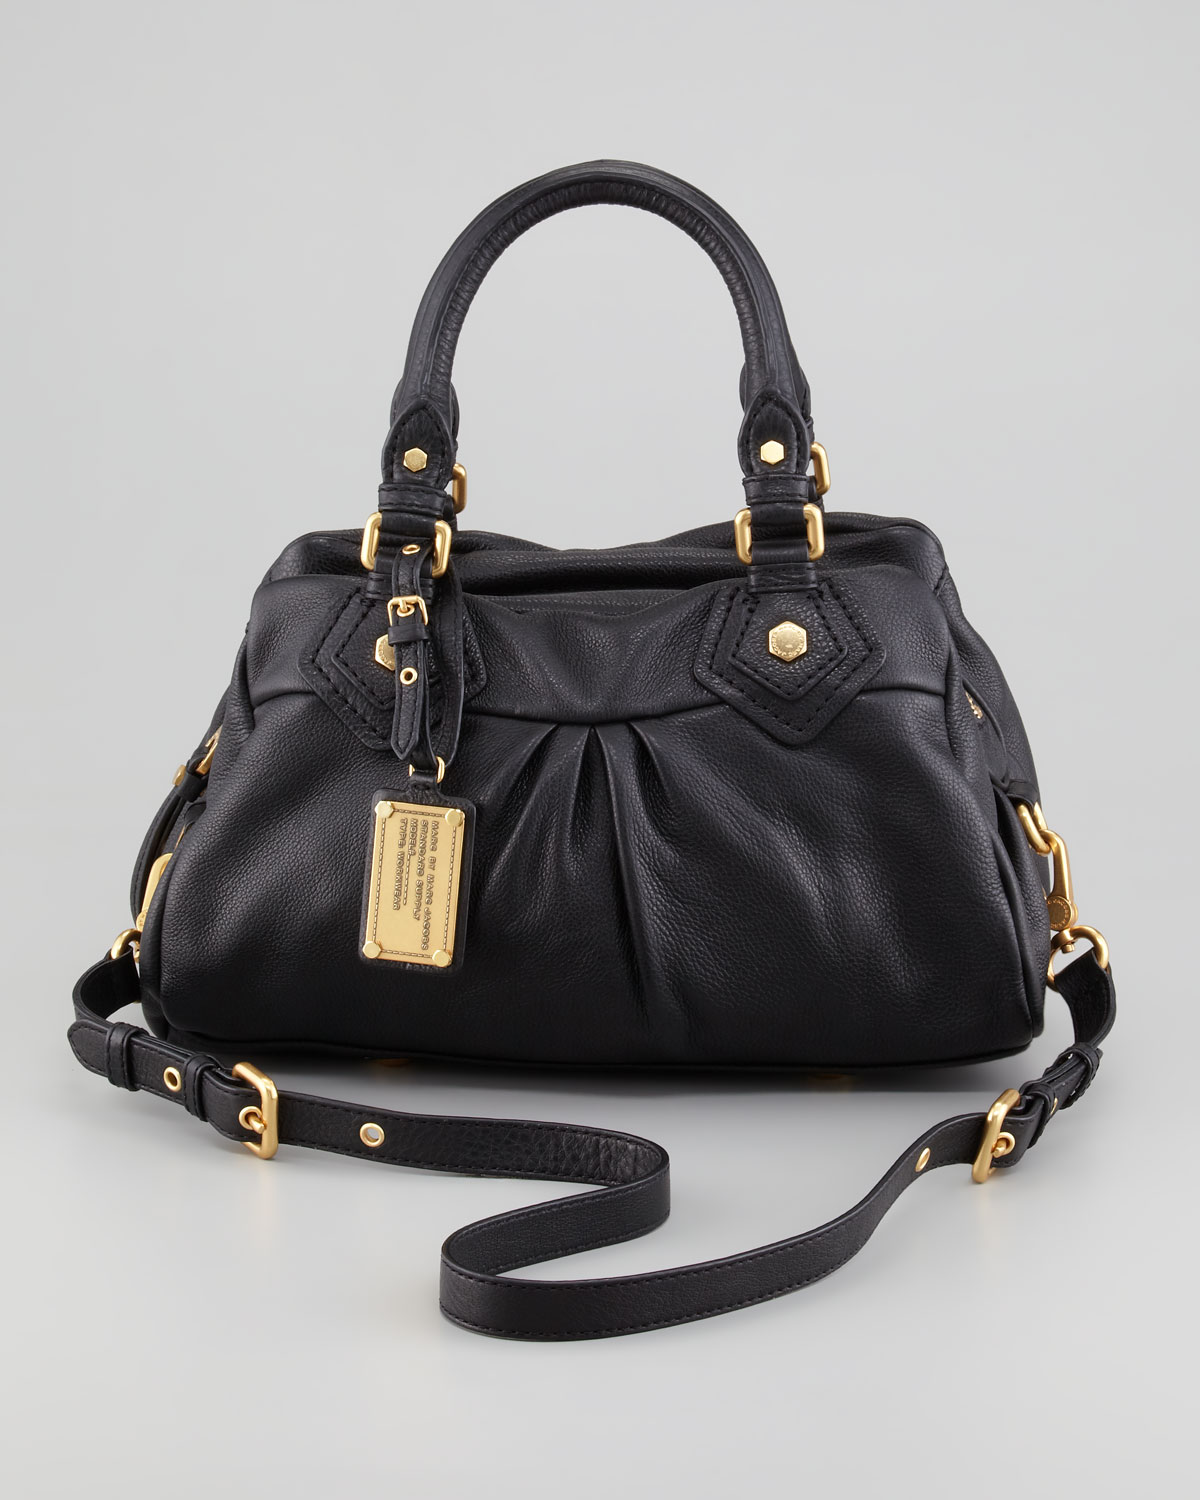 Marc Jacobs Women Handbags | Paul Smith